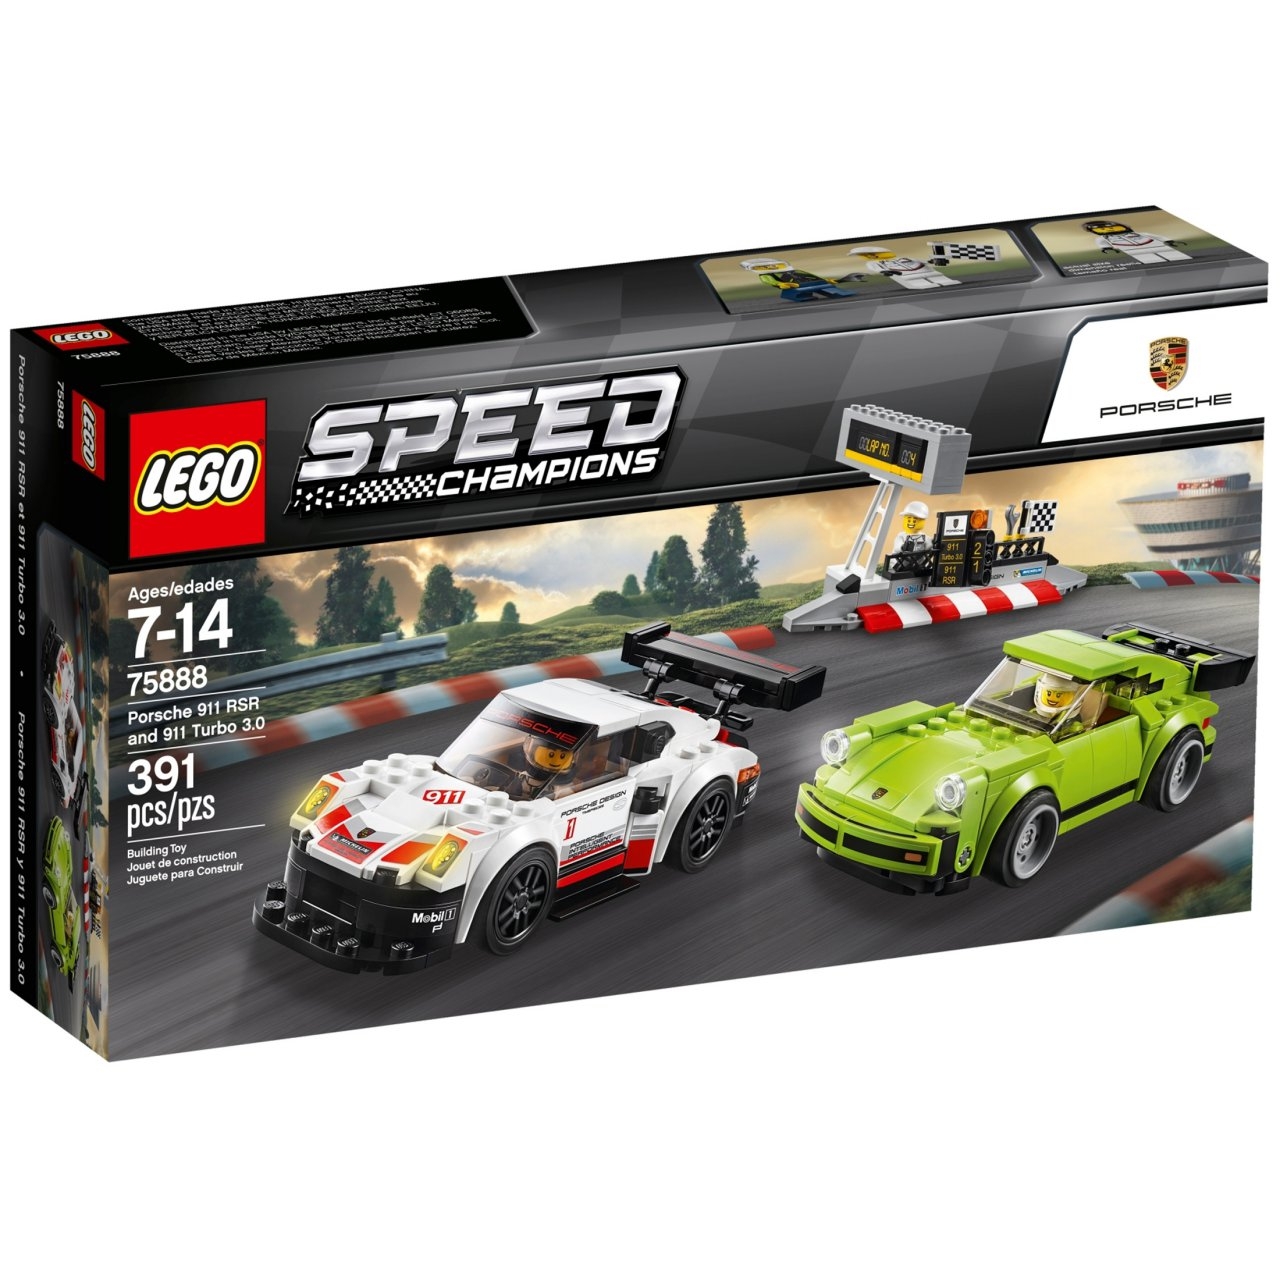 لگو سری Speed مدل Porsche 911 RSR and 911 Turbo 75888